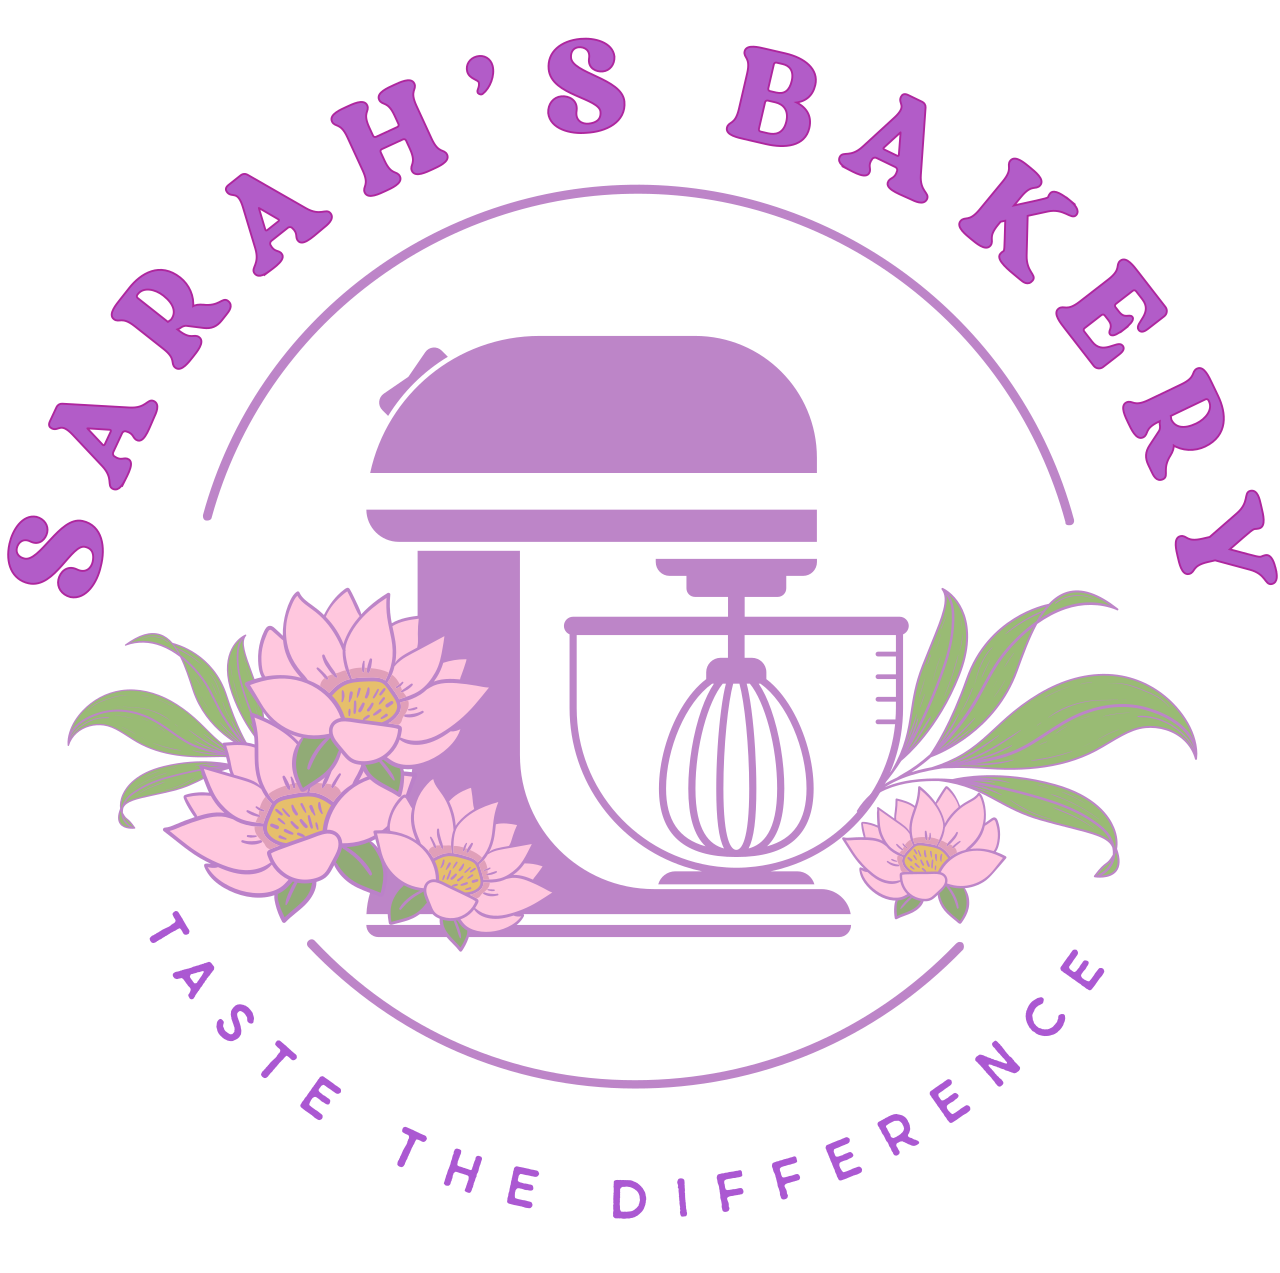  SARAH’S BAKERY 's logo